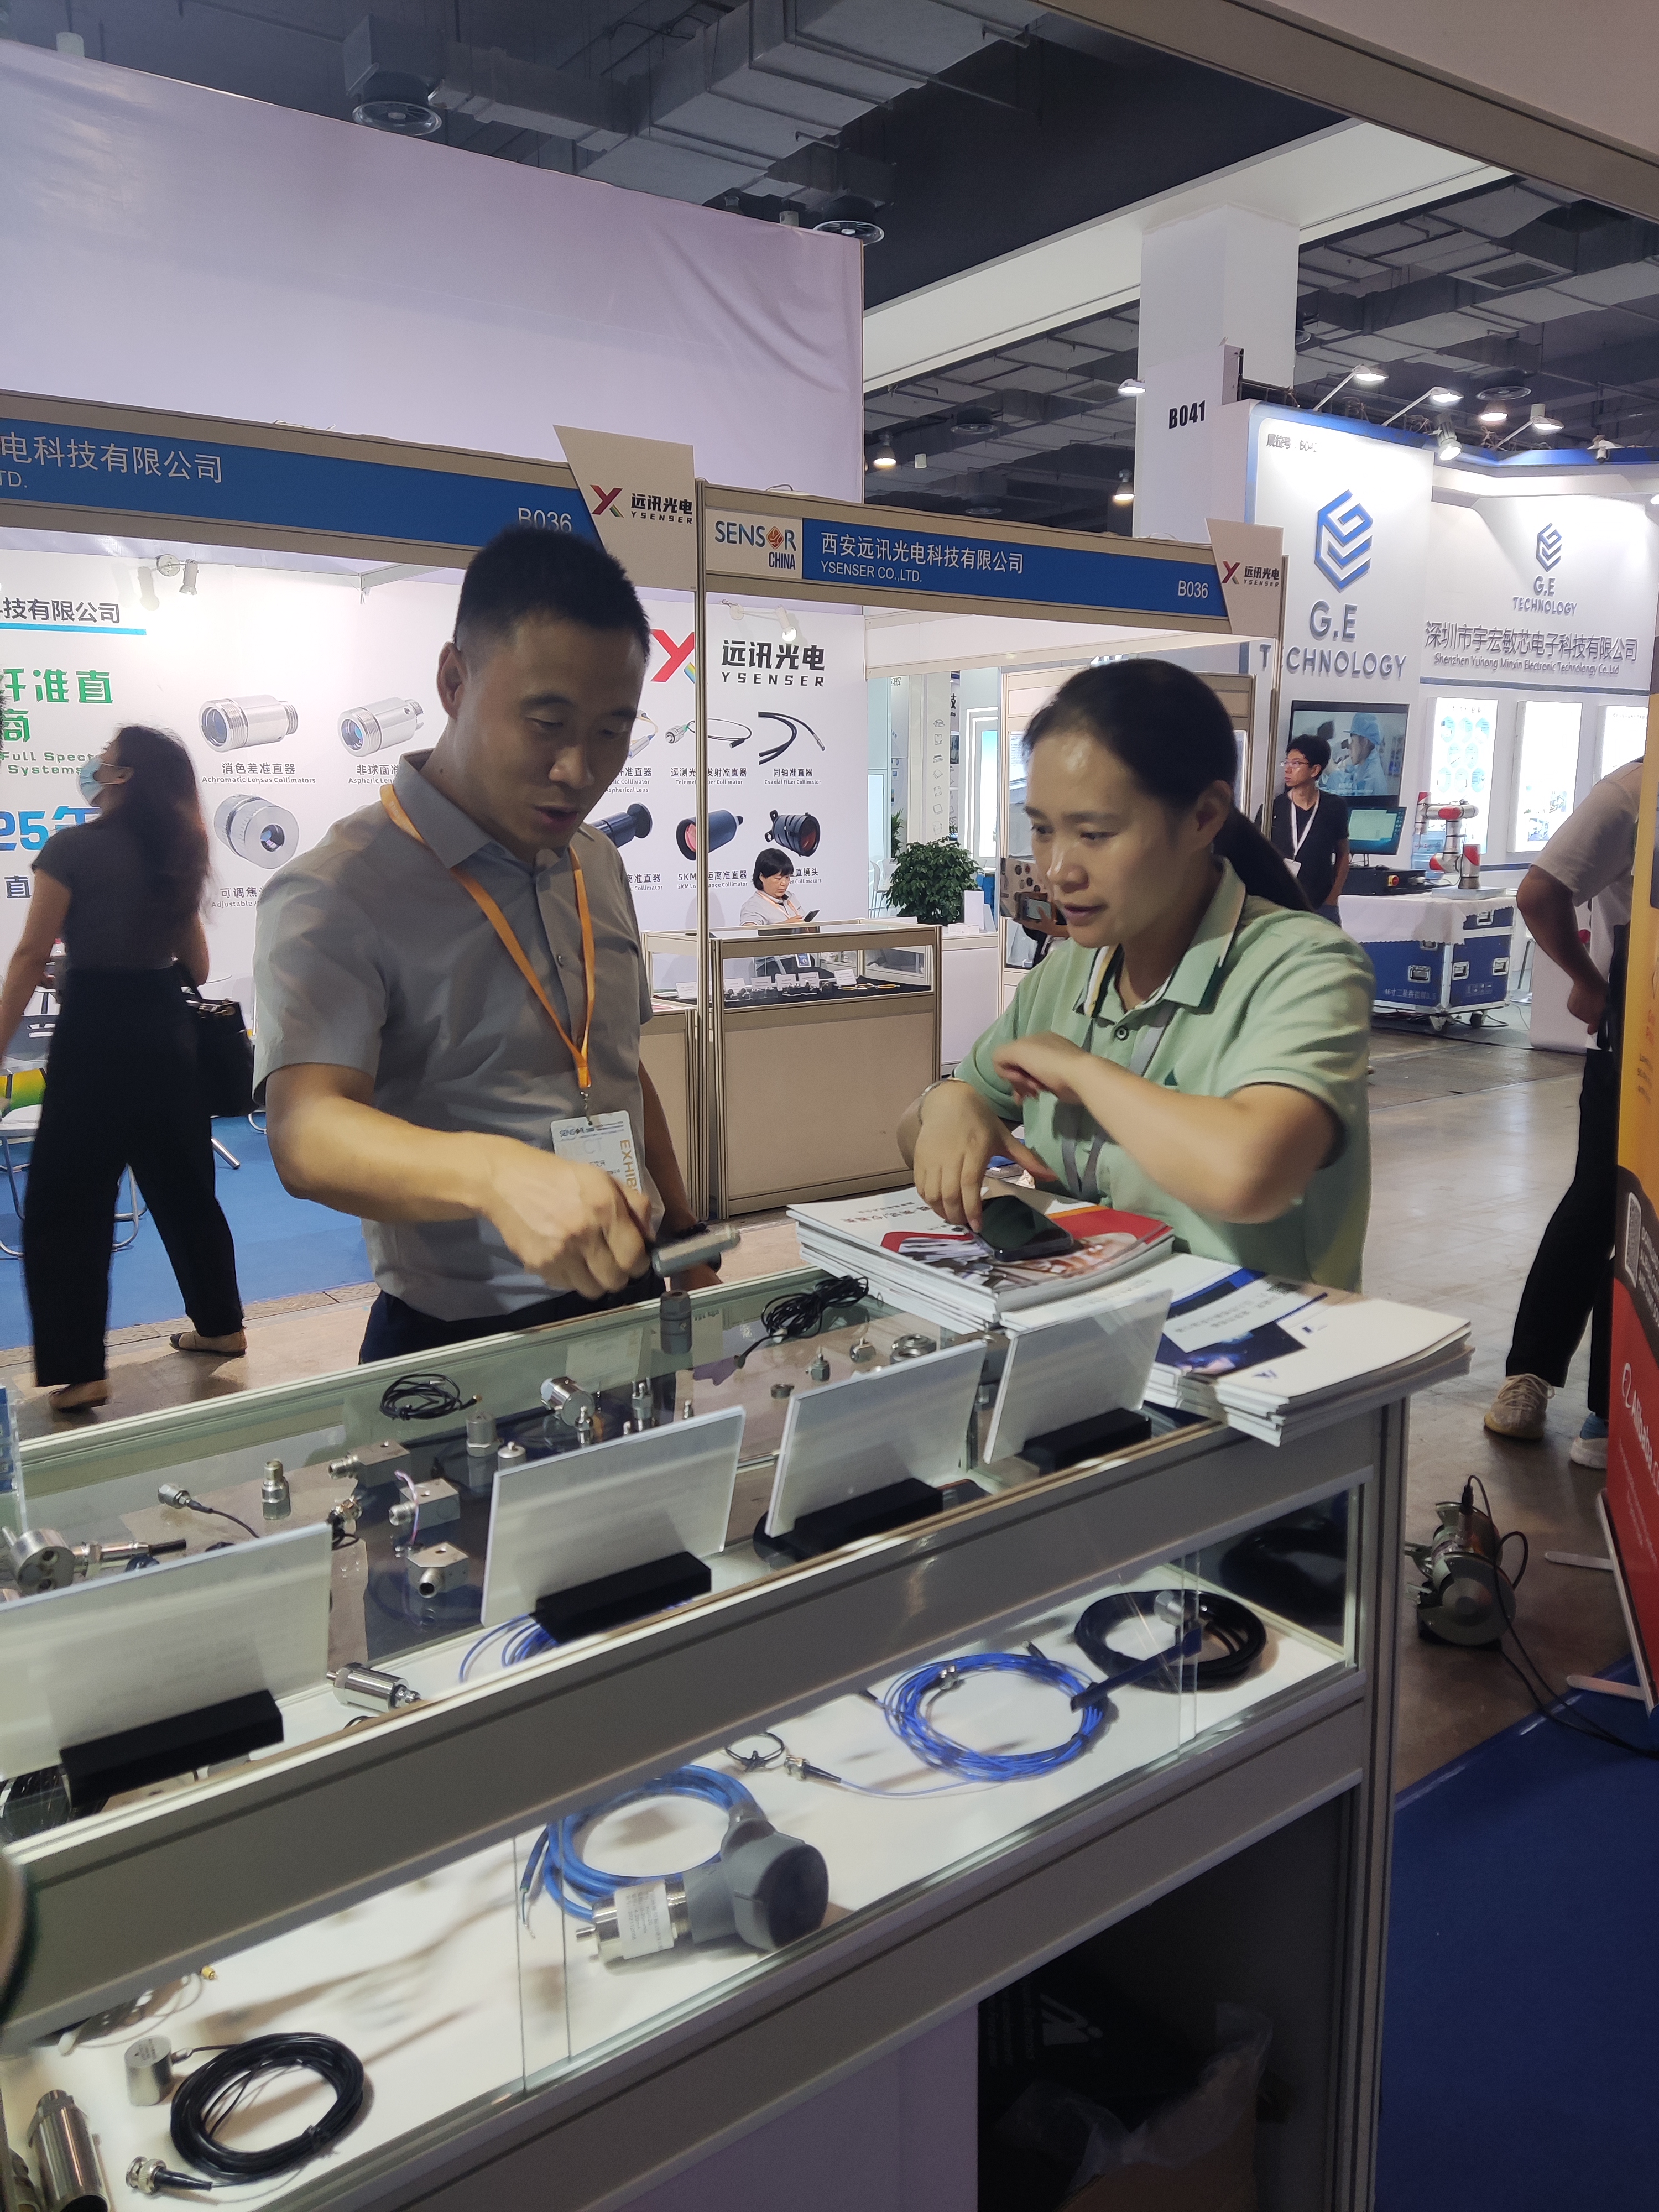 Shanghai International Sensor Technology and Application Exhibition